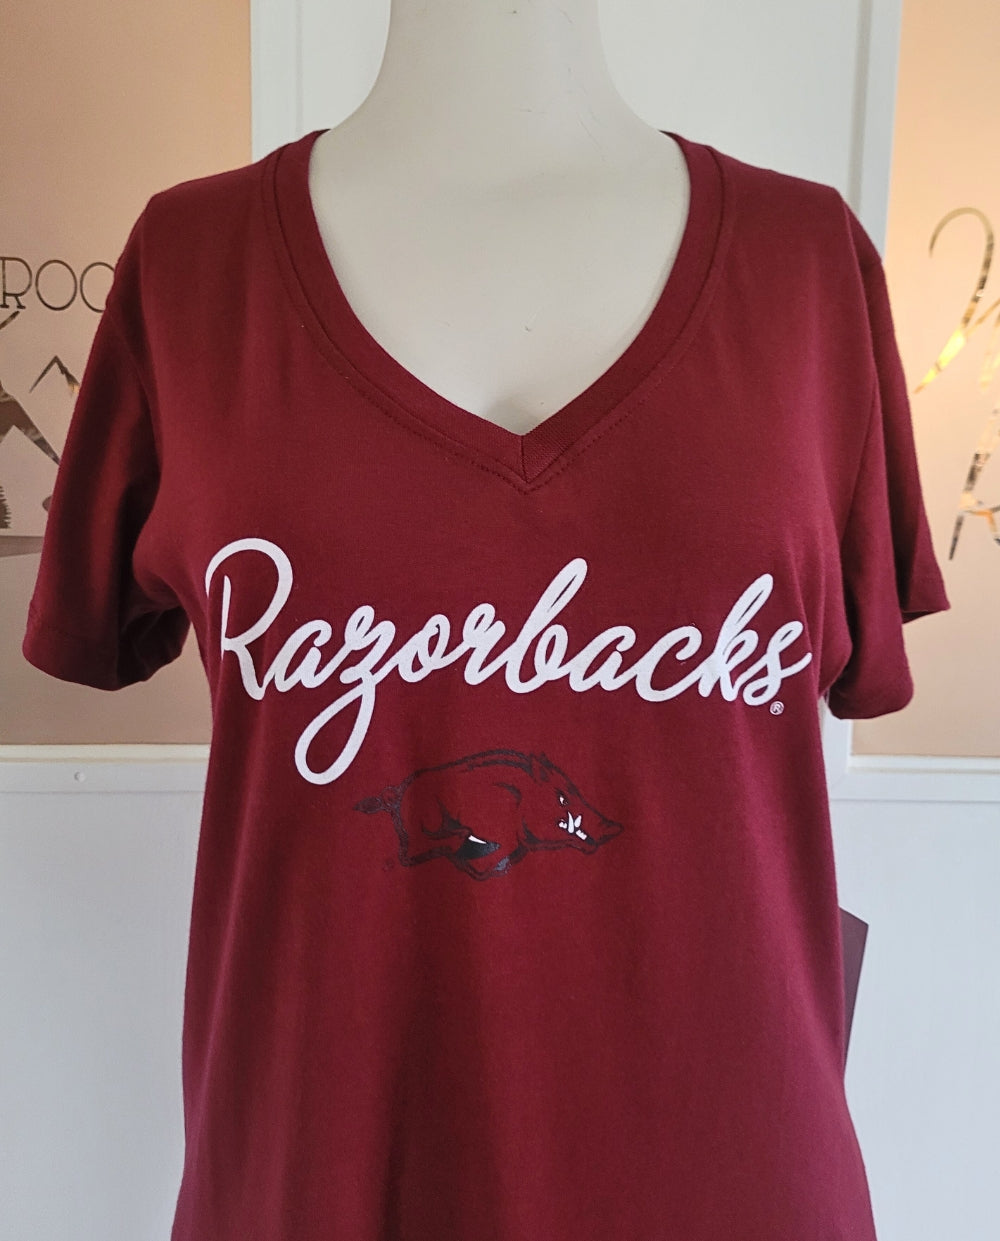 Arkansas Razorback V-Neck T-shirt